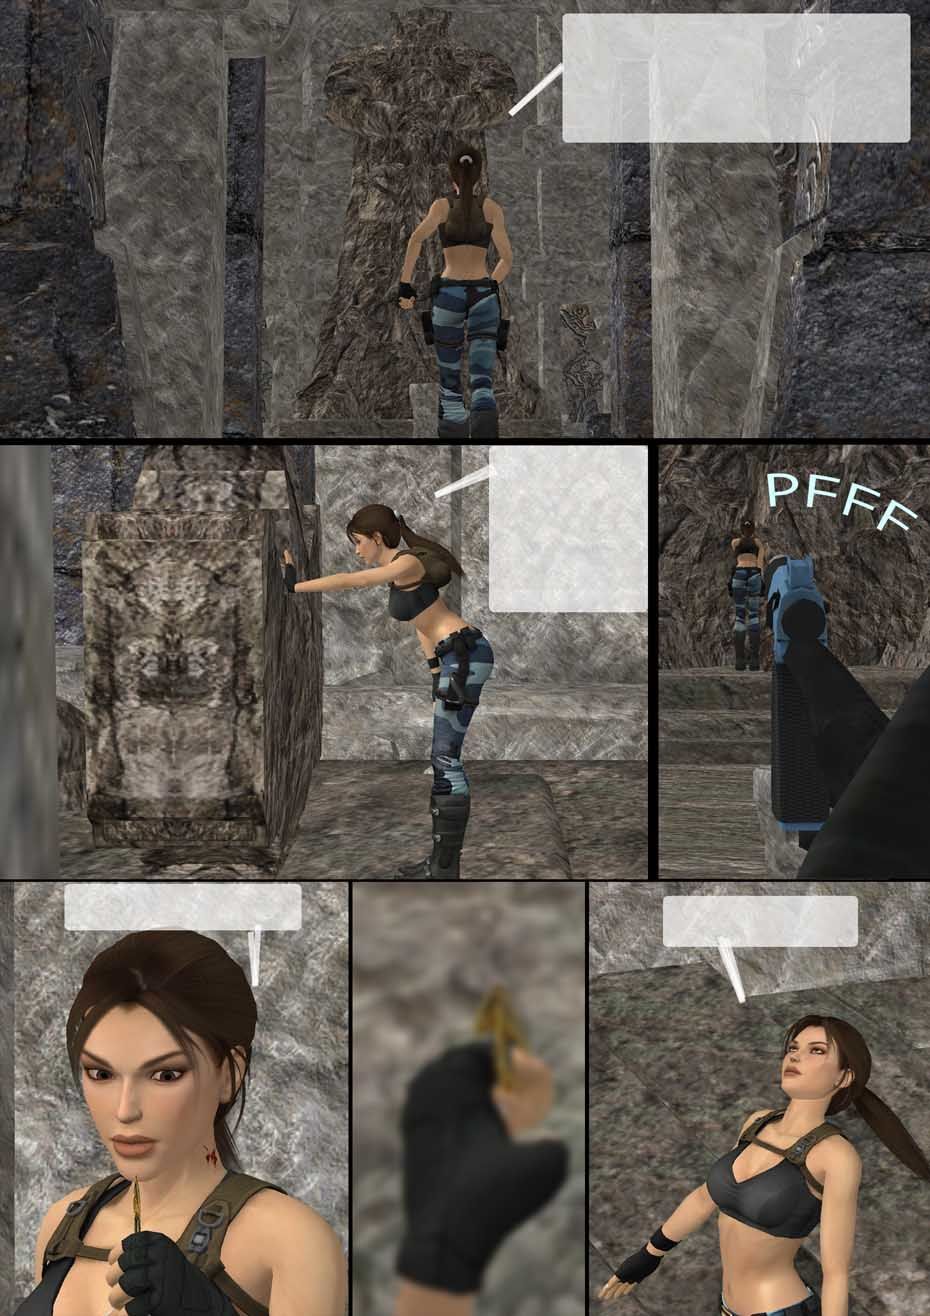 Tomb Raider Endgame